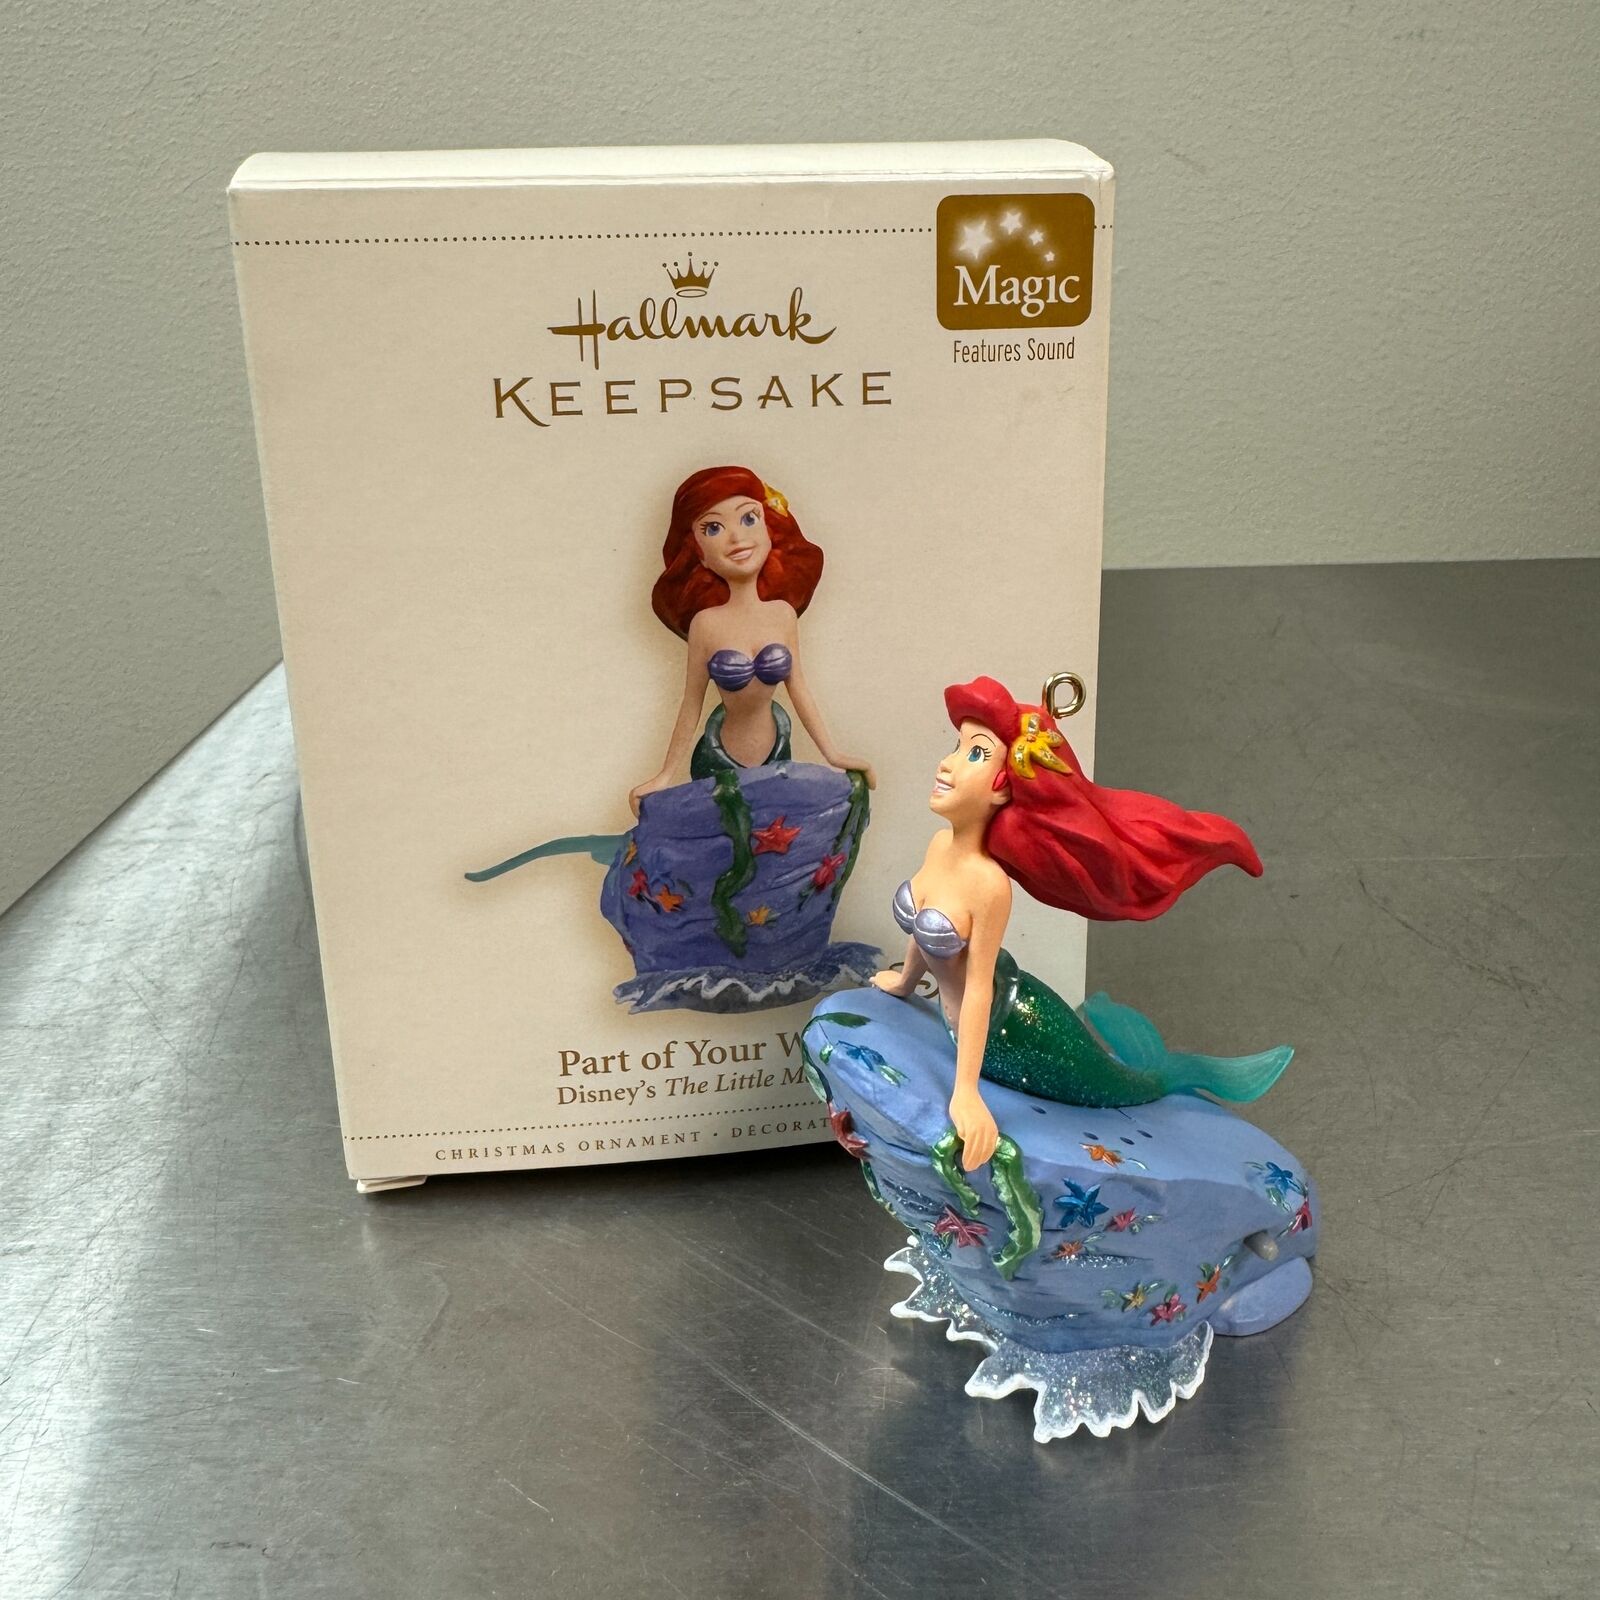 Hallmark Keepsake Ornament 2006 - Part of Your World - Disney The Little Mermaid